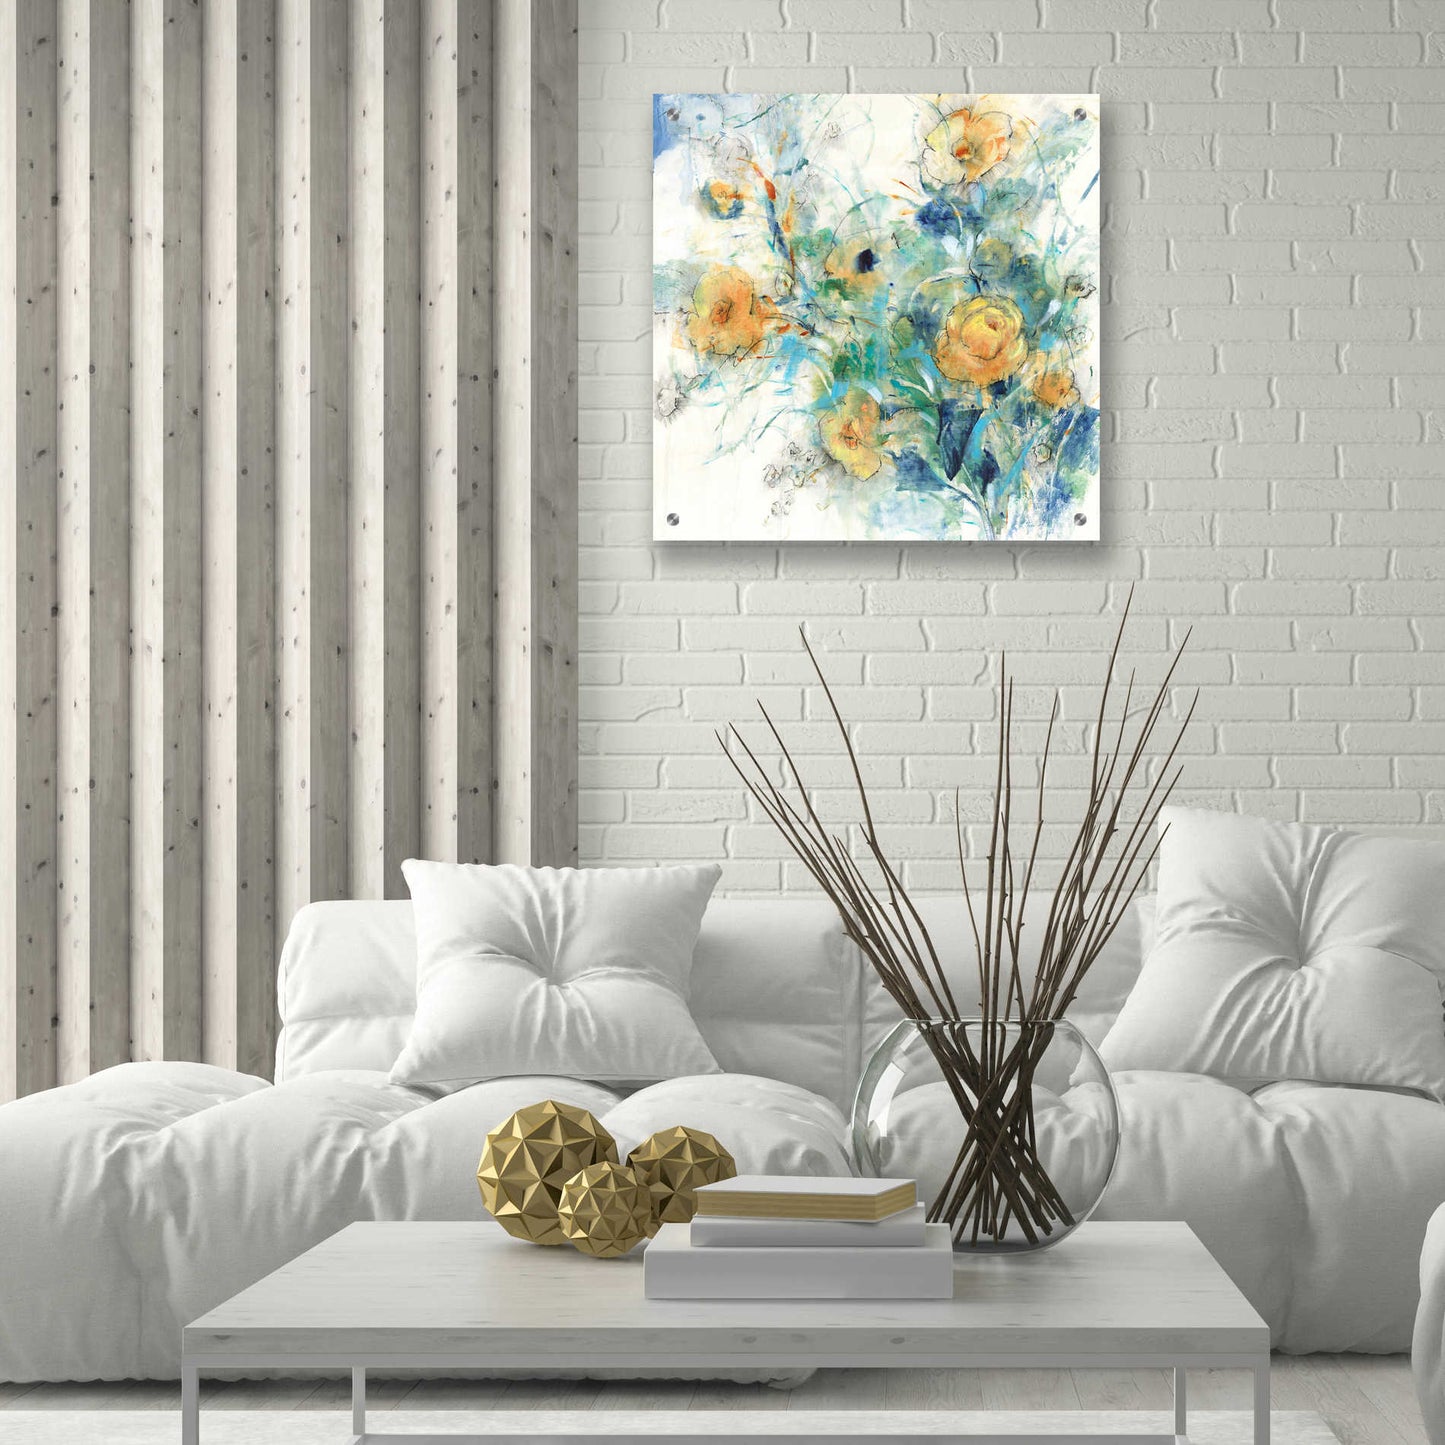 Epic Art 'Flower Study II' by Tim O'Toole, Acrylic Glass Wall Art,24x24